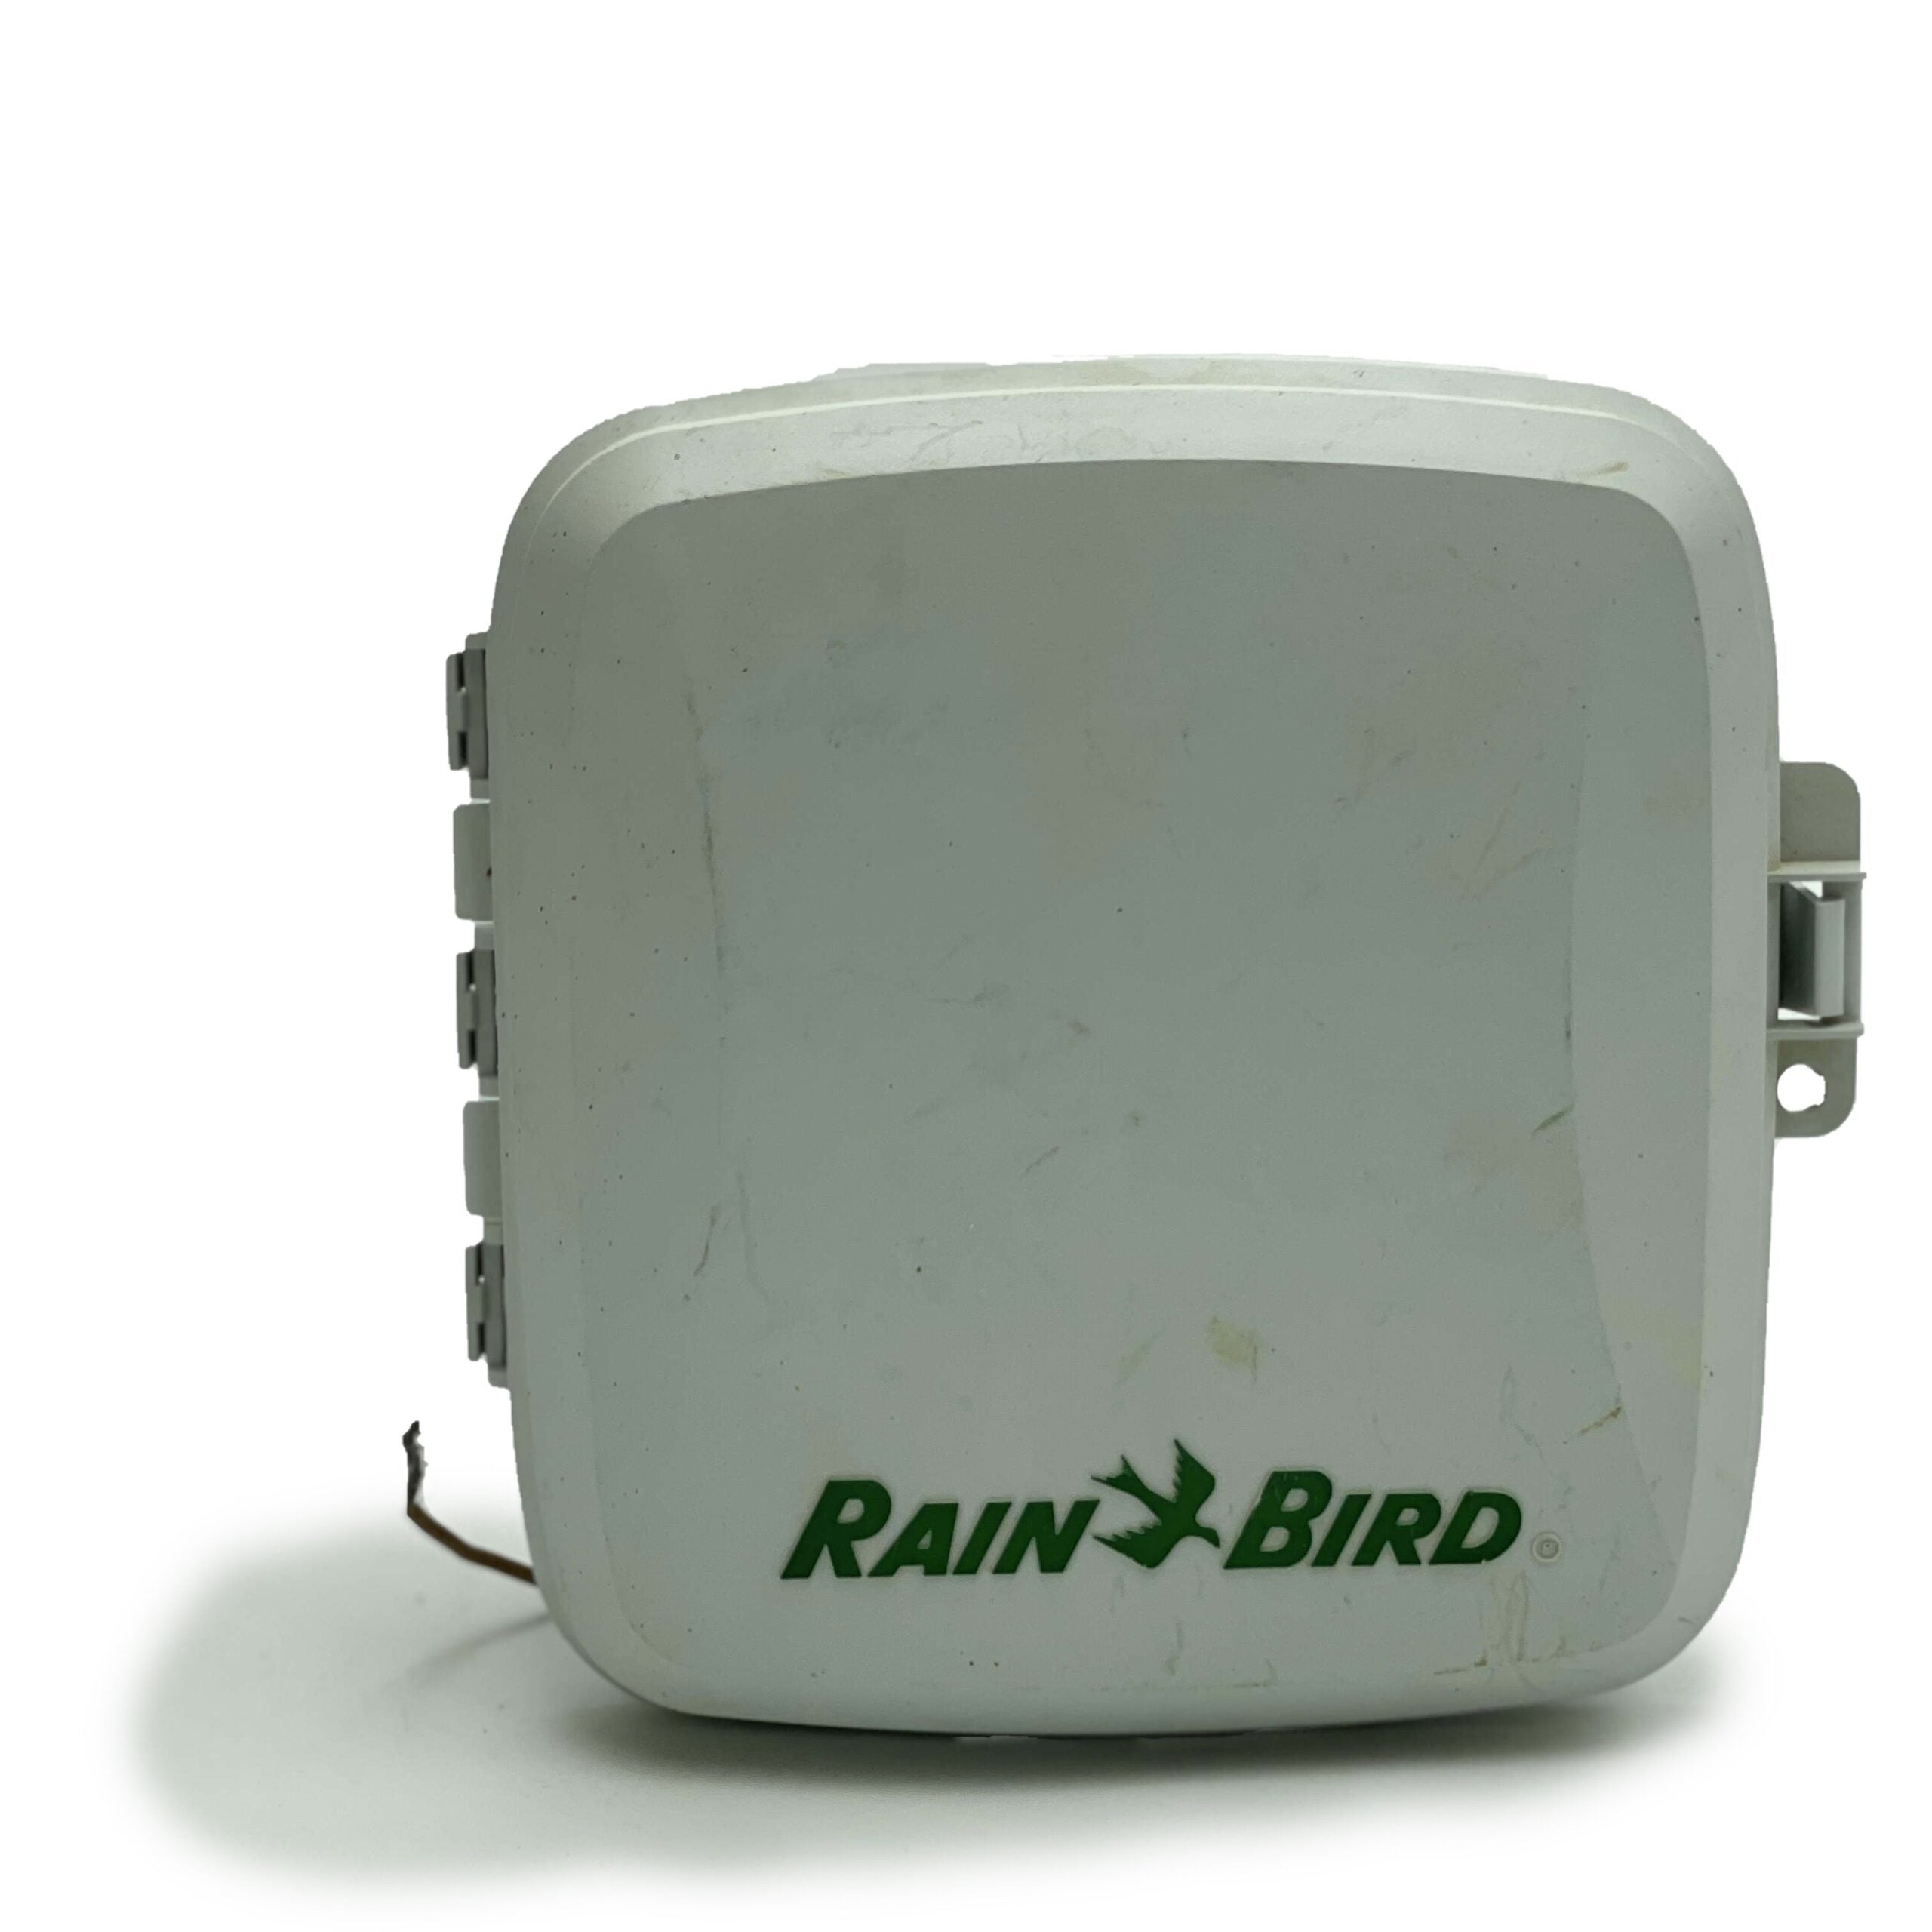 Rain Bird ESP-RZXe- Controller